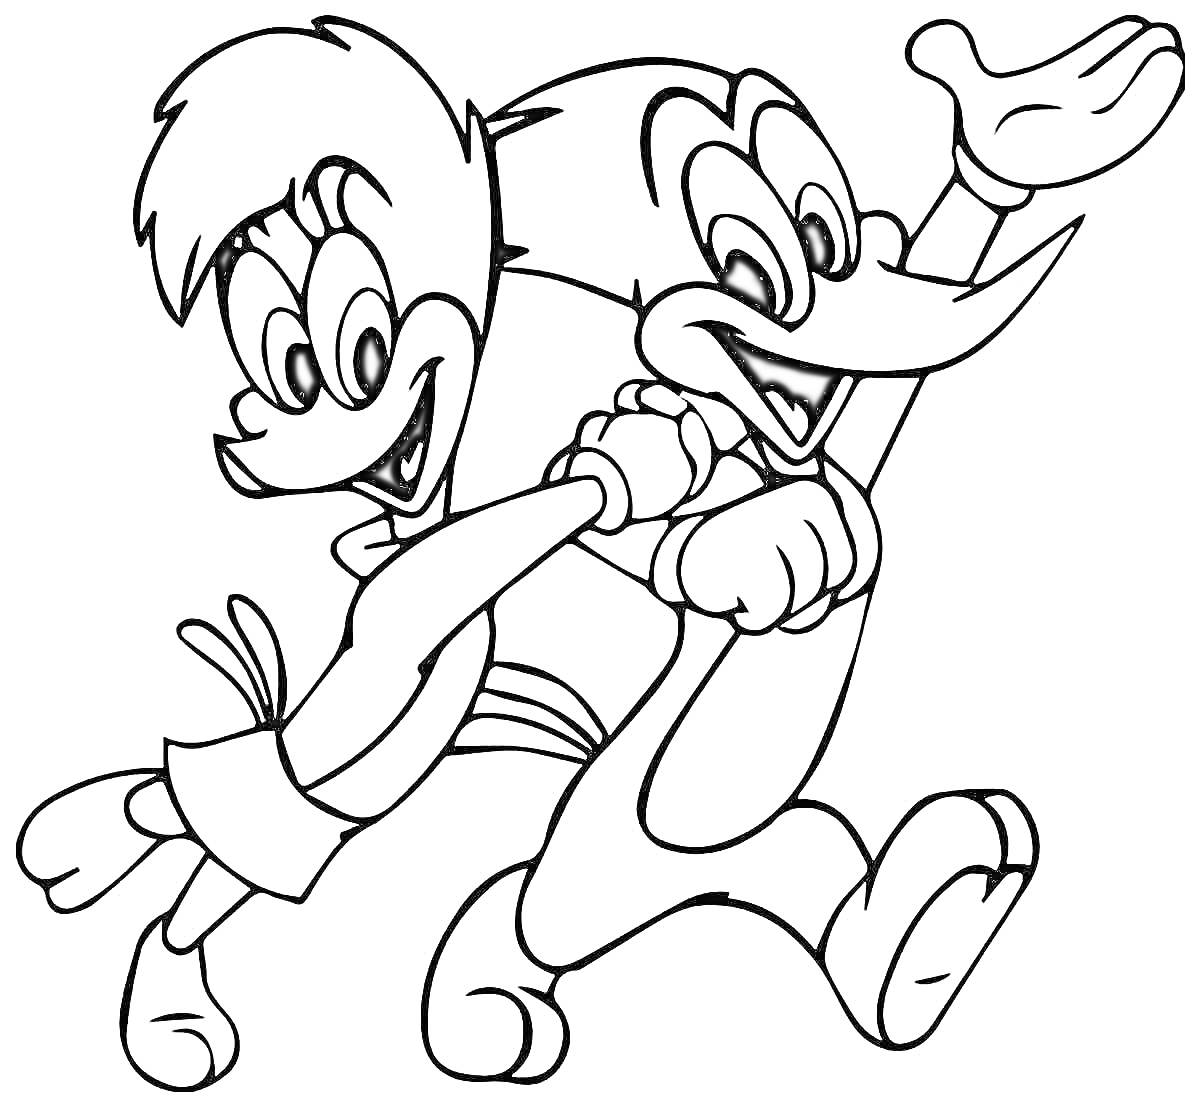 Раскраска Два мультяшных персонажа бегут и держатся за руки